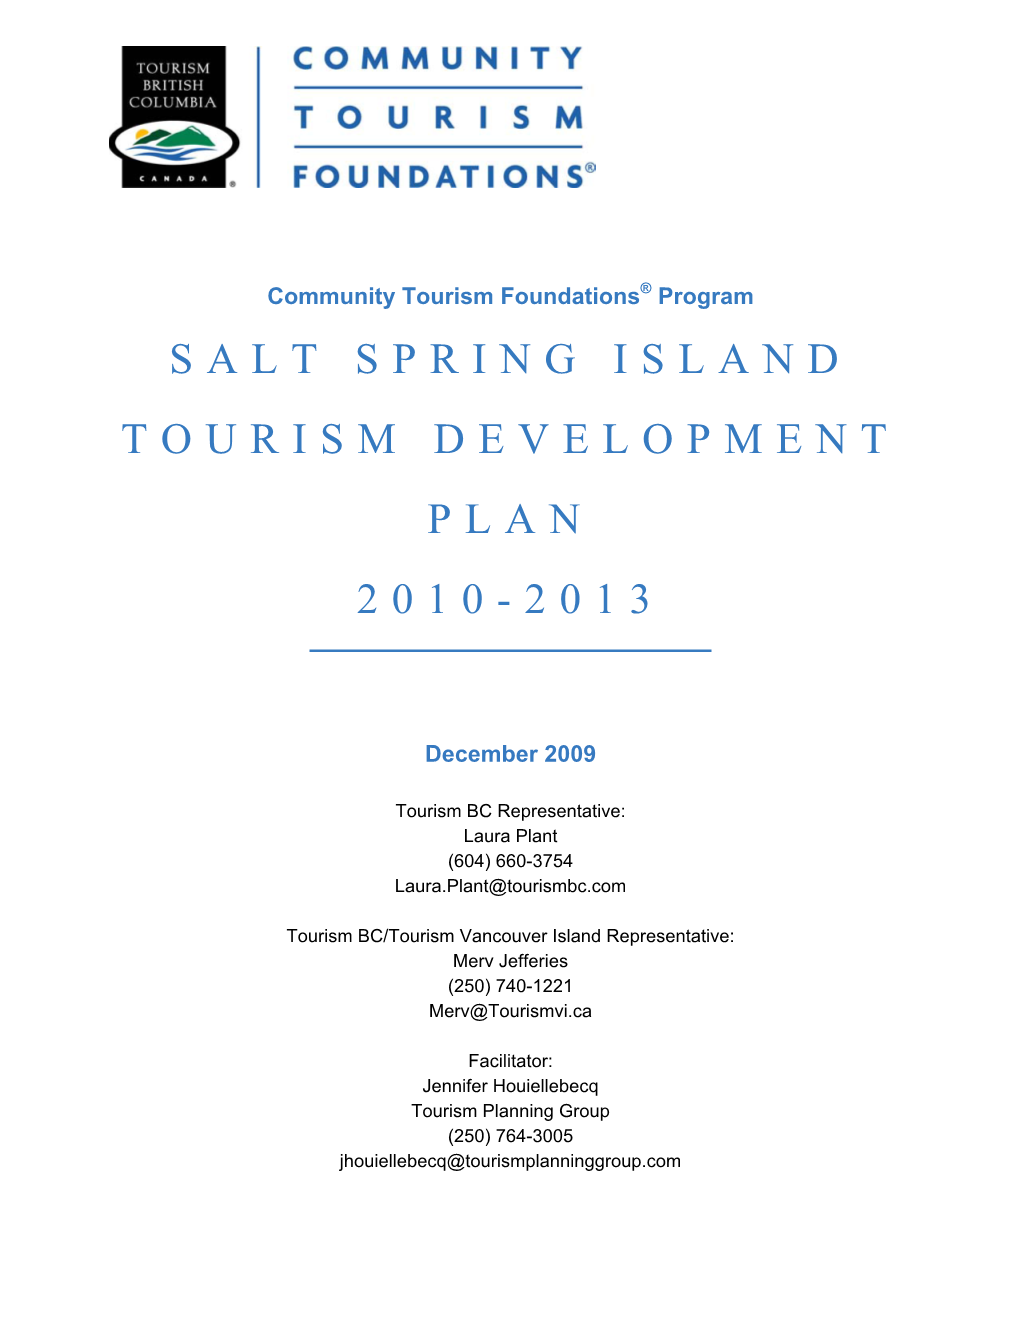 Salt Spring Island Tourism Development Plan 2010-2013